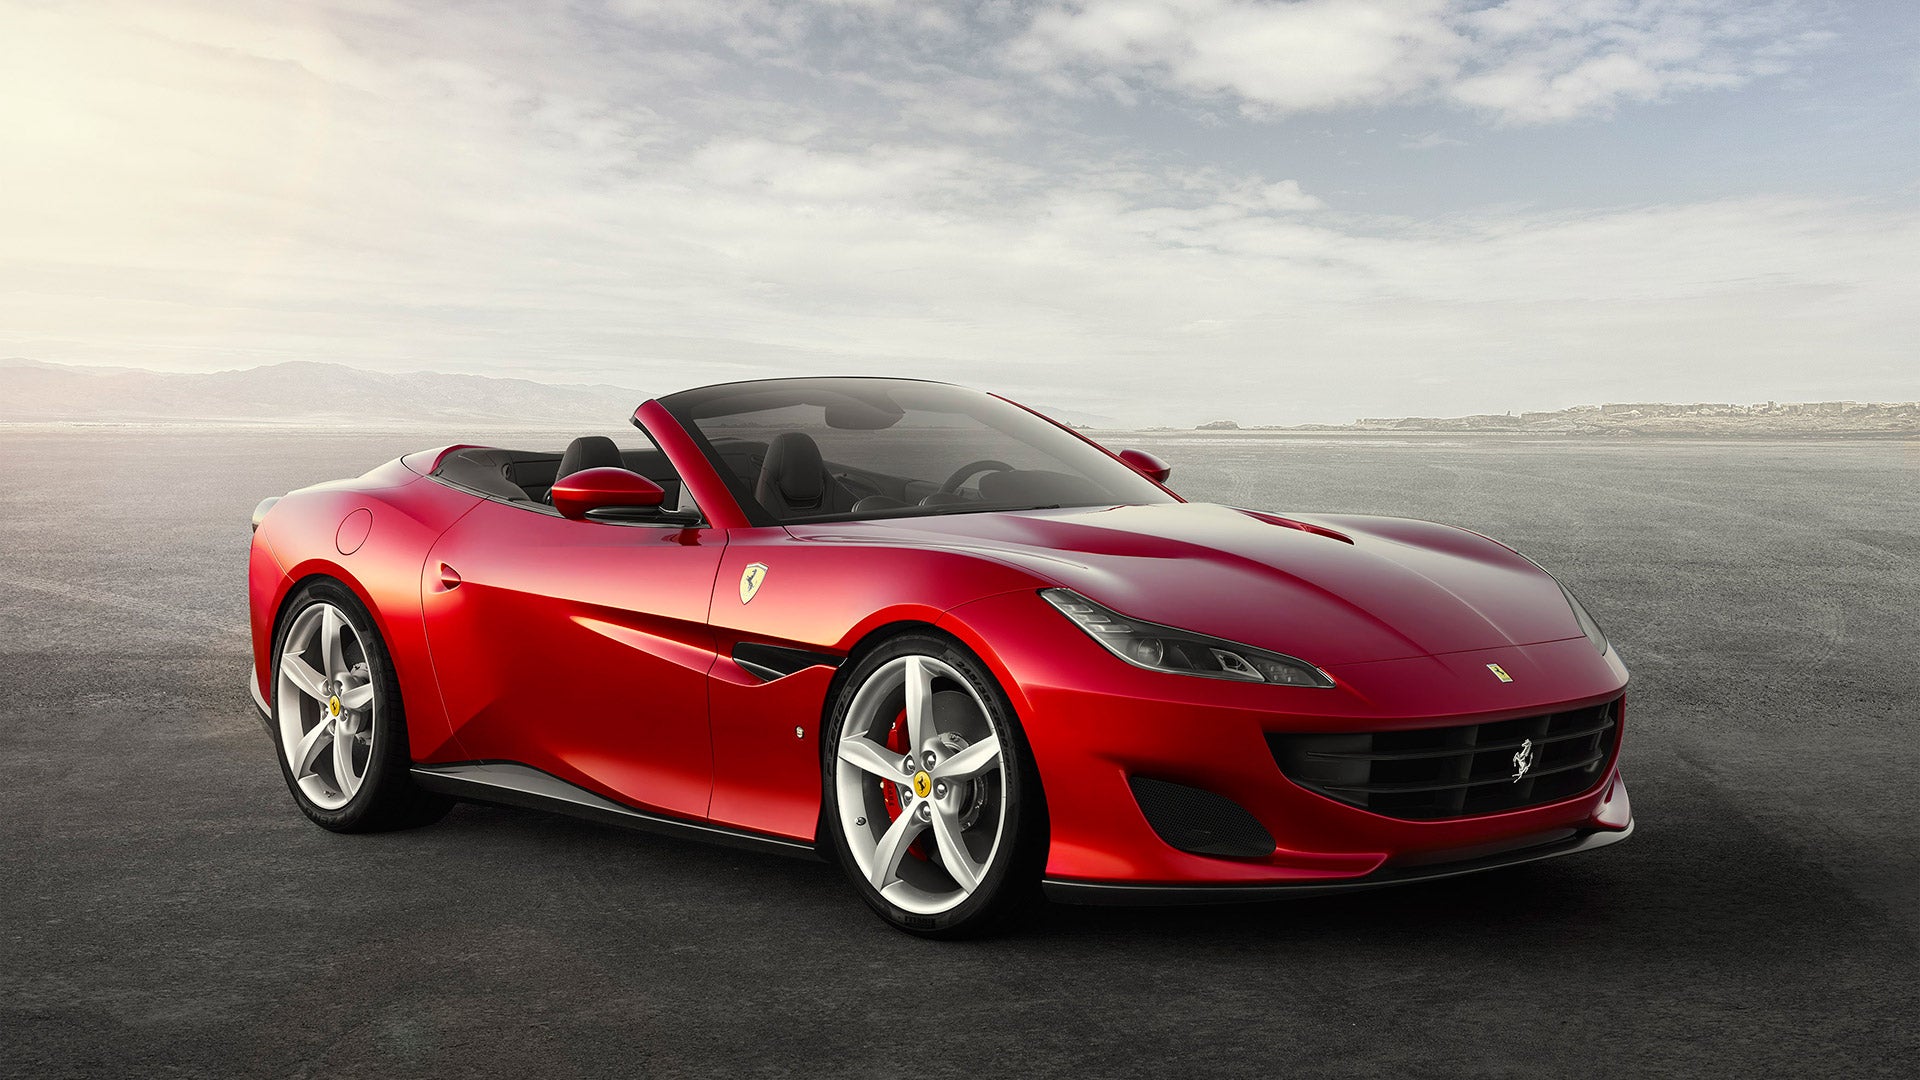 The Ferrari Portofino: A 600-Horsepower “Entry-Level” Dynamo